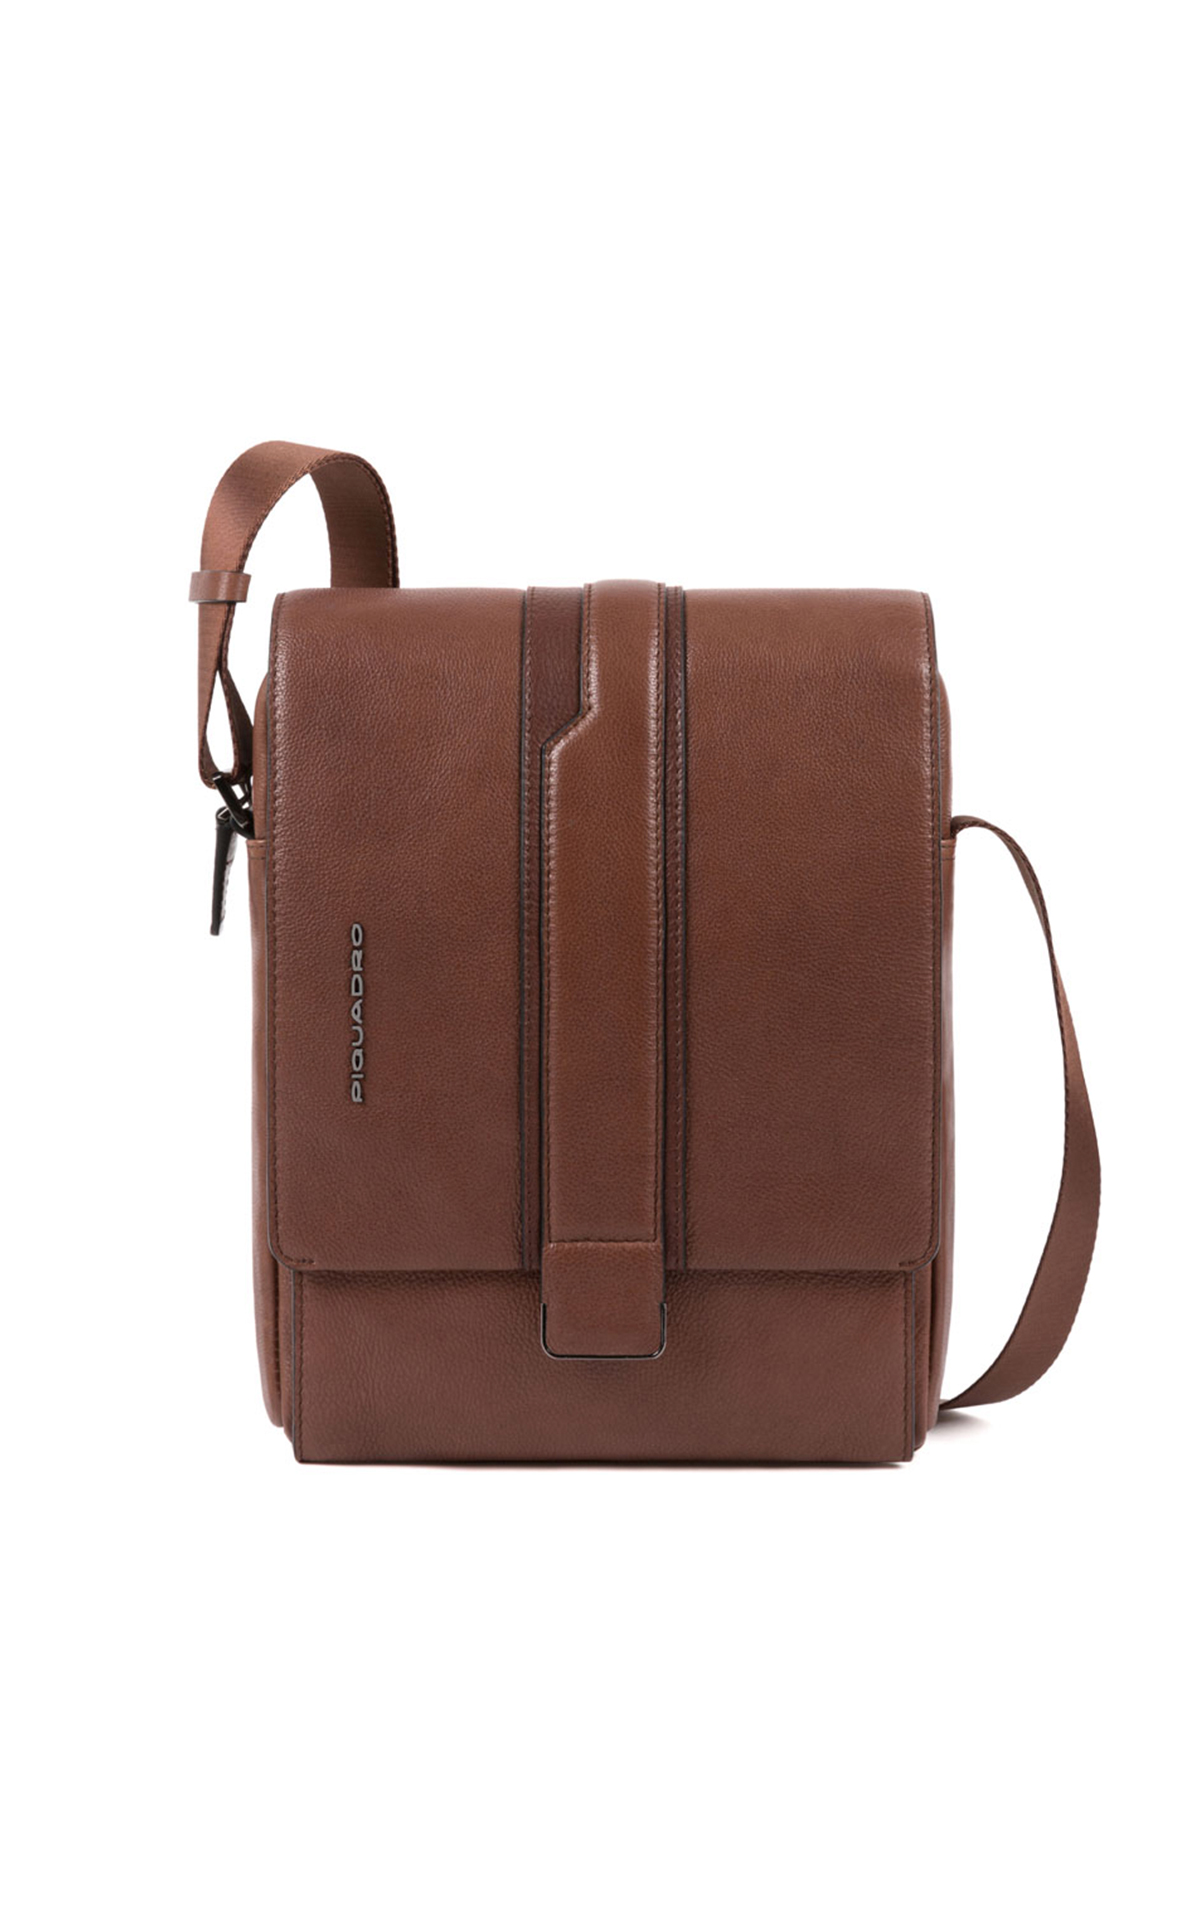 Brown leather shoulder bag for man Piquadro